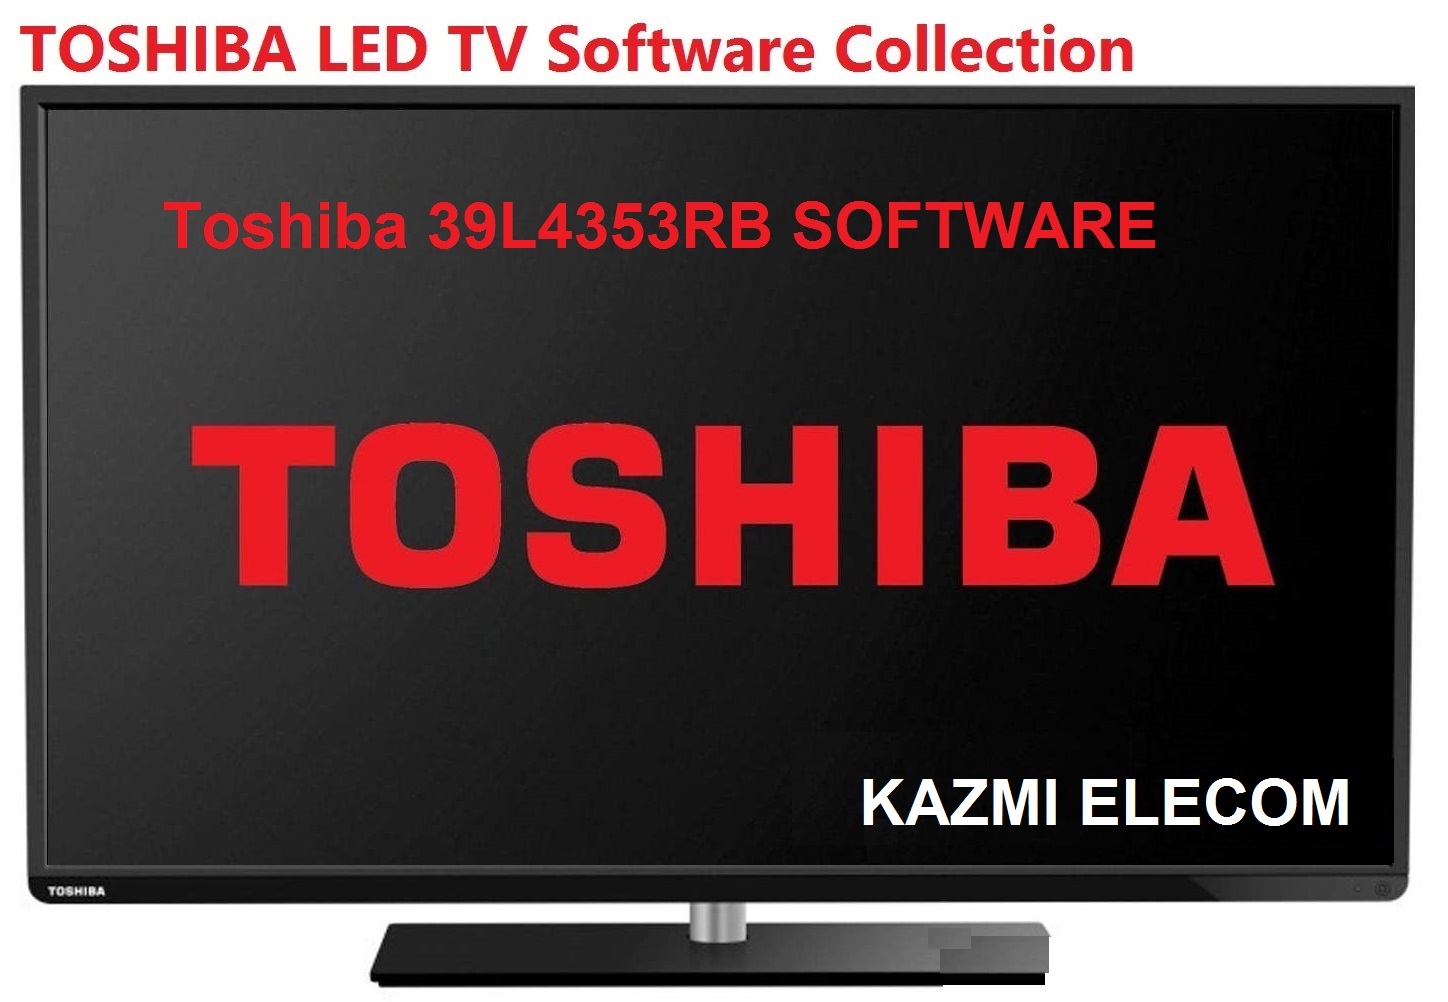 Toshiba 39L4353Rb